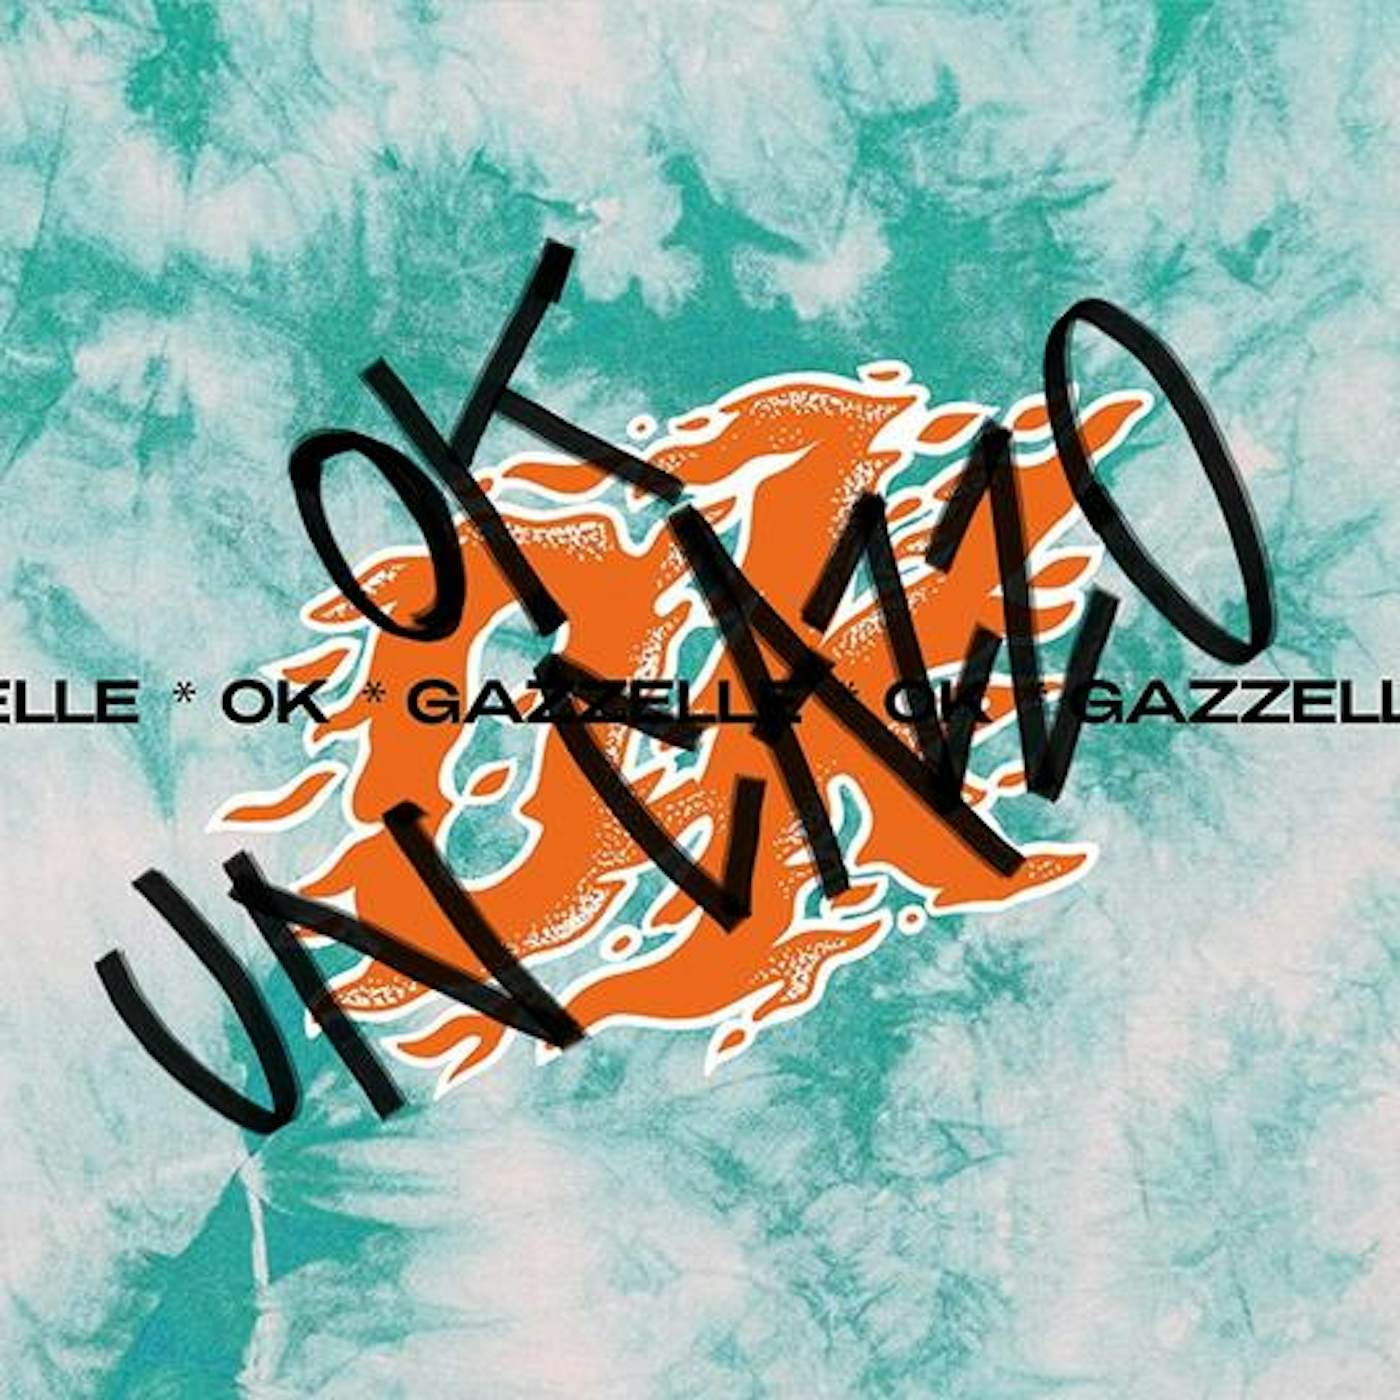 Gazzelle OK UN CAZZO Vinyl Record